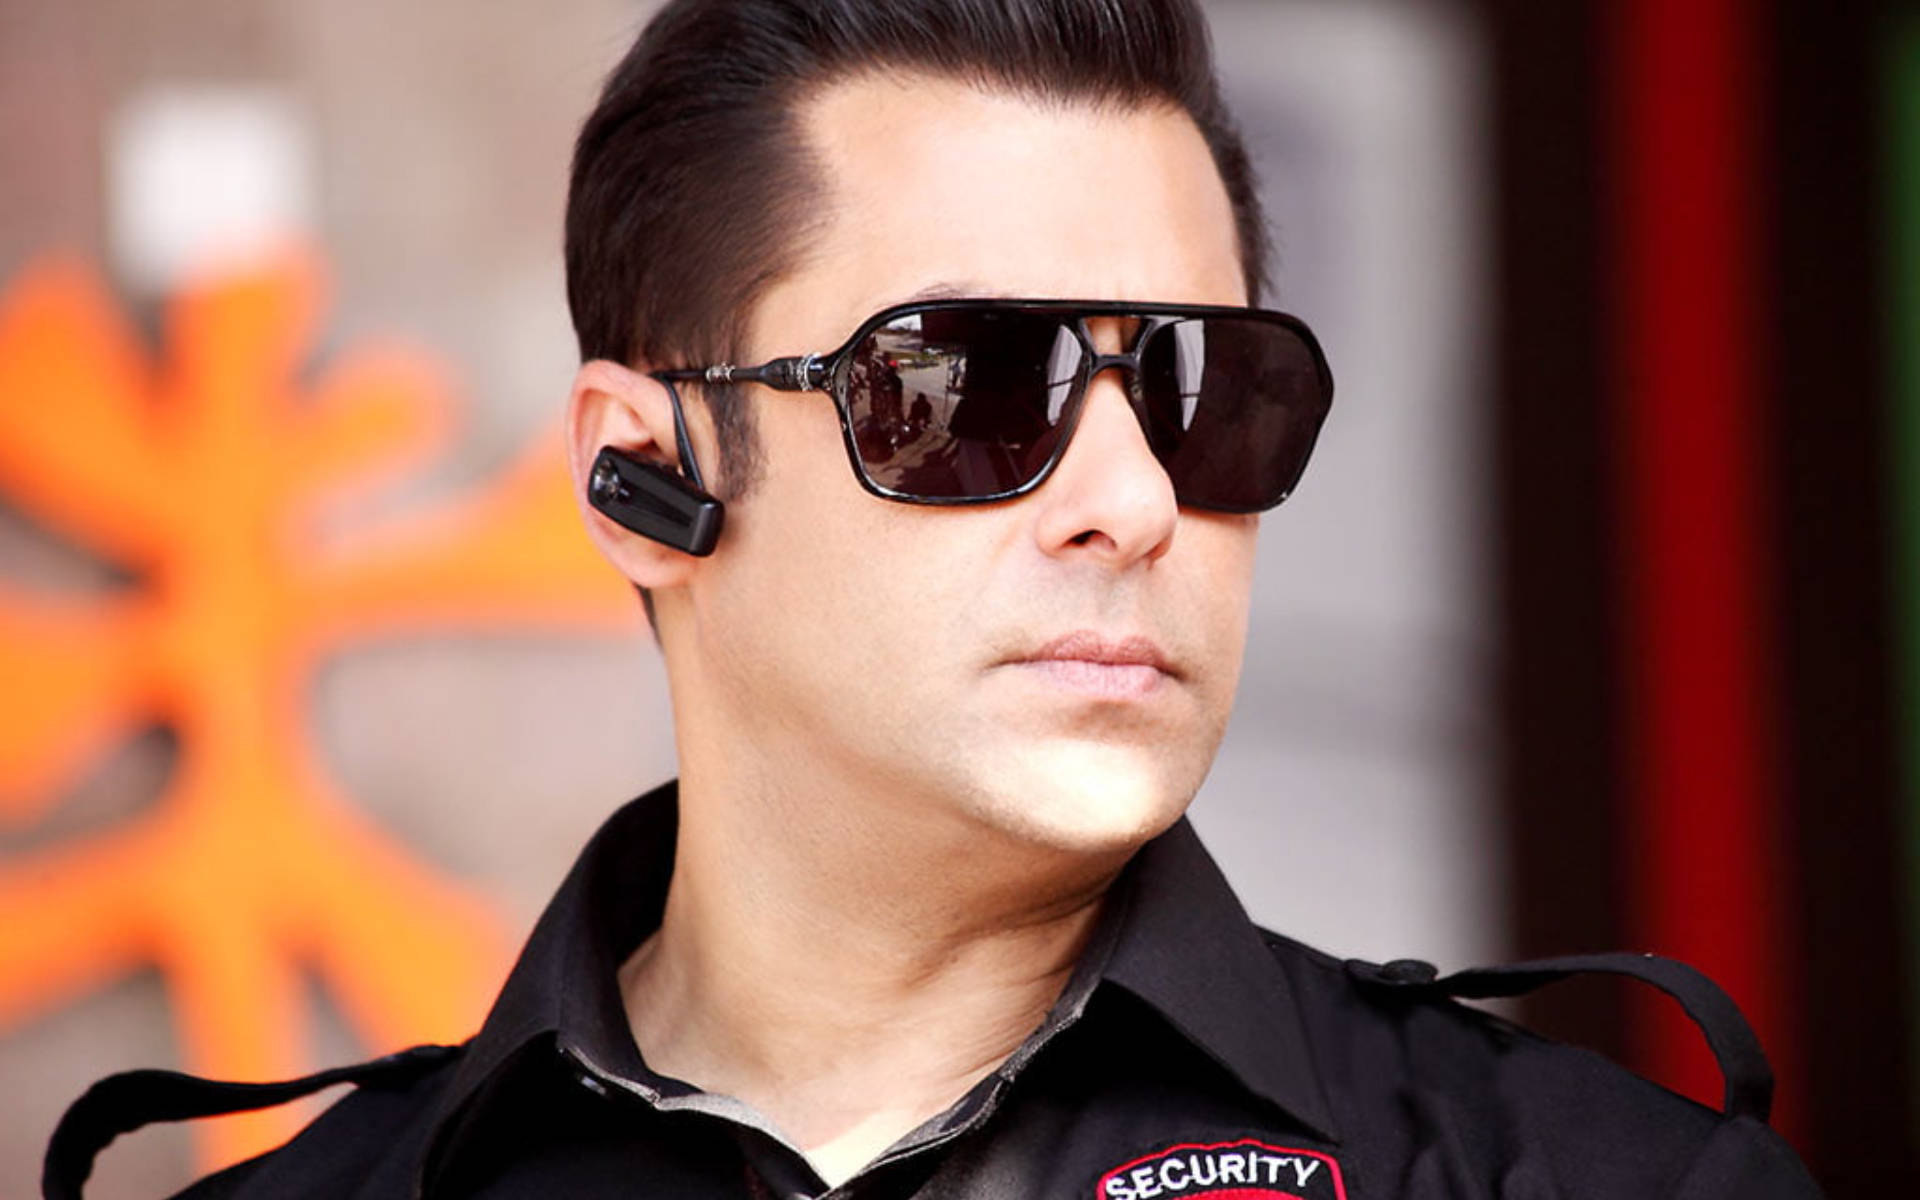 Salman Khan In Security Uniform Background